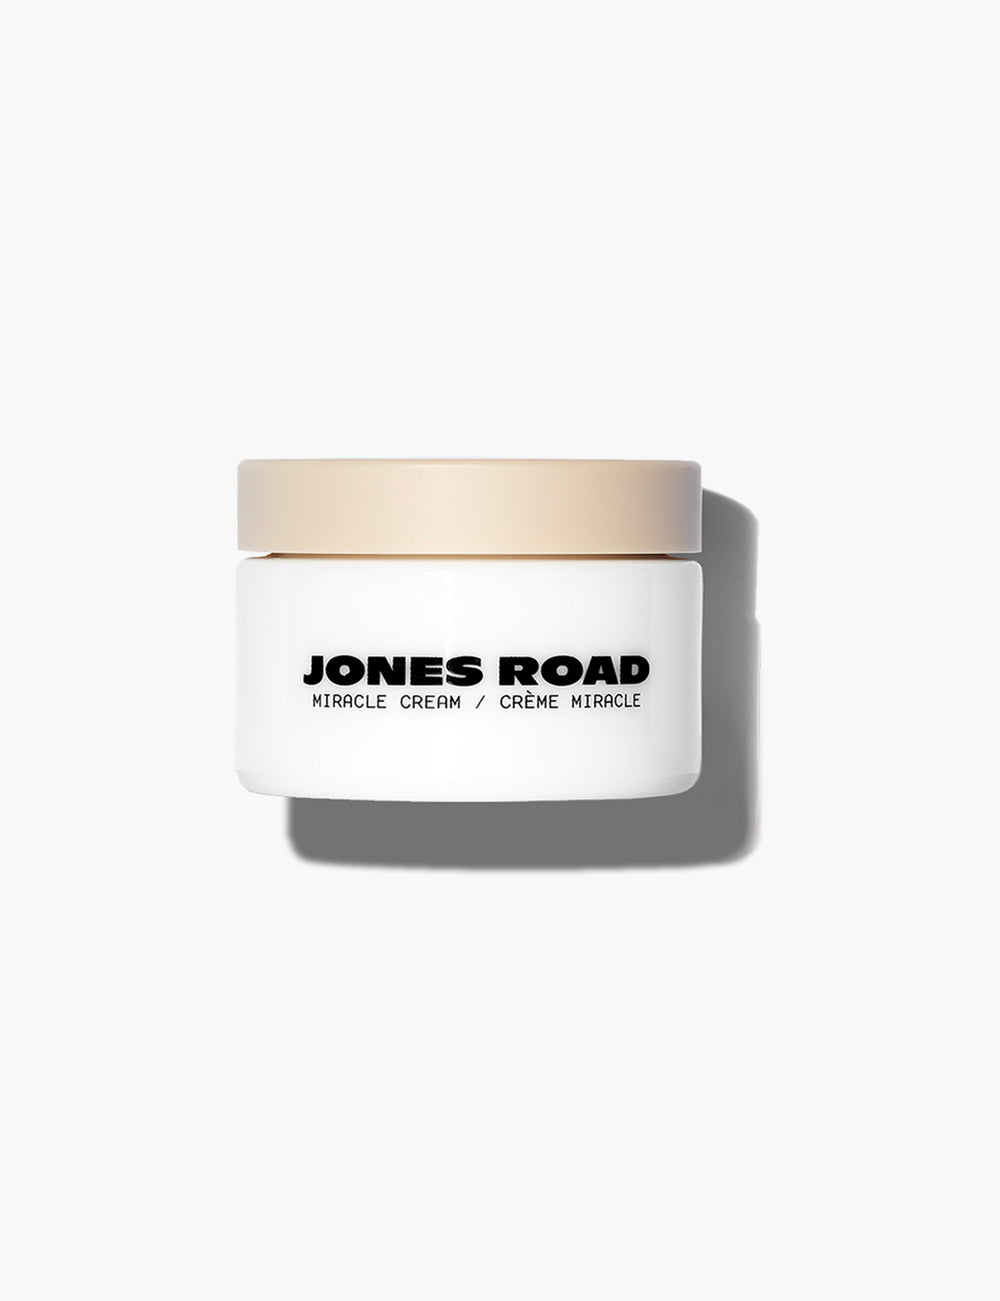 Jones Road Beauty's Miracle Cream